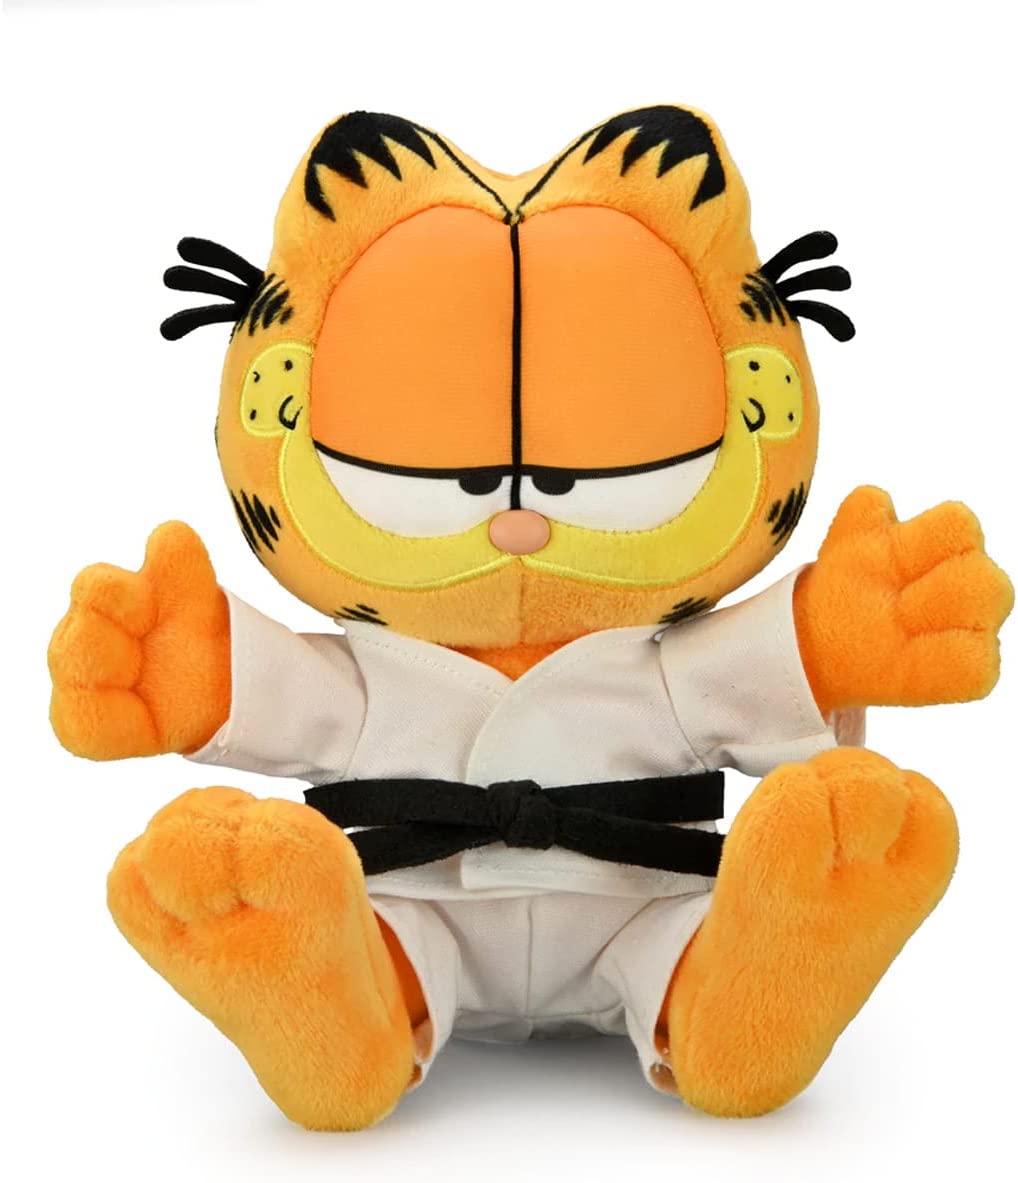 Garfield Plush WholeSale - Price List, Bulk Buy at